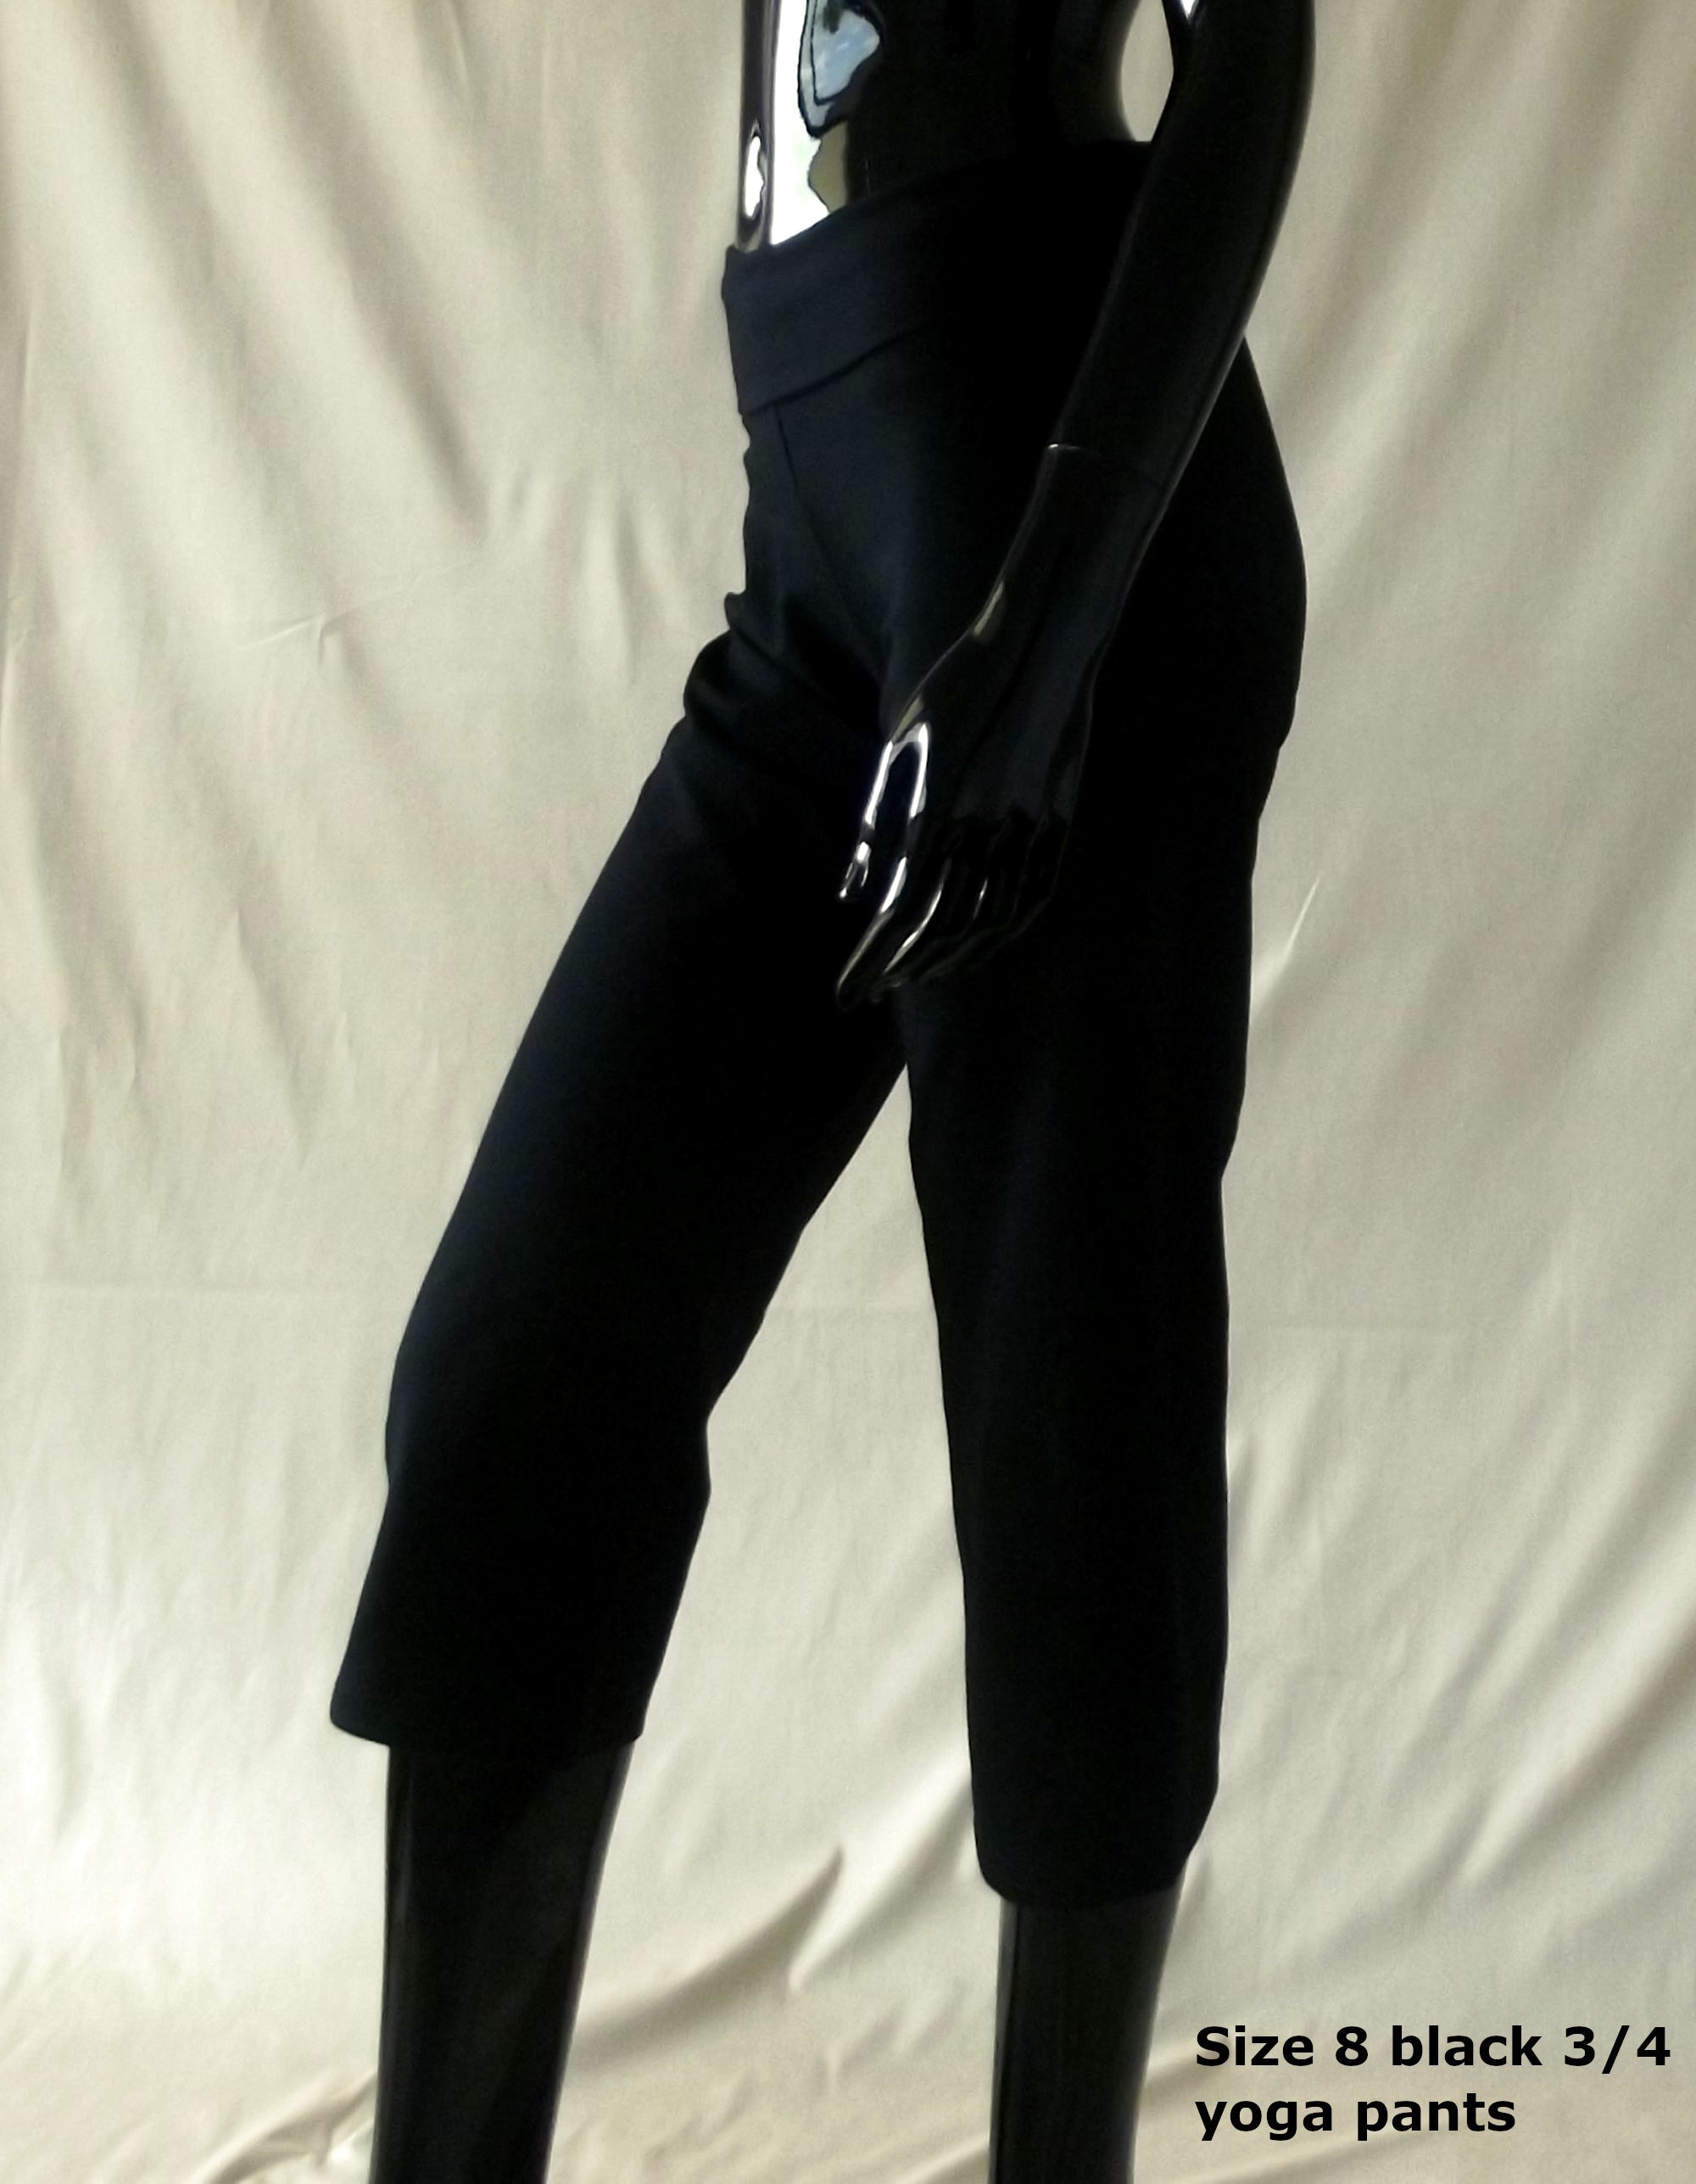 black 3/4 length stretchy yoga pants